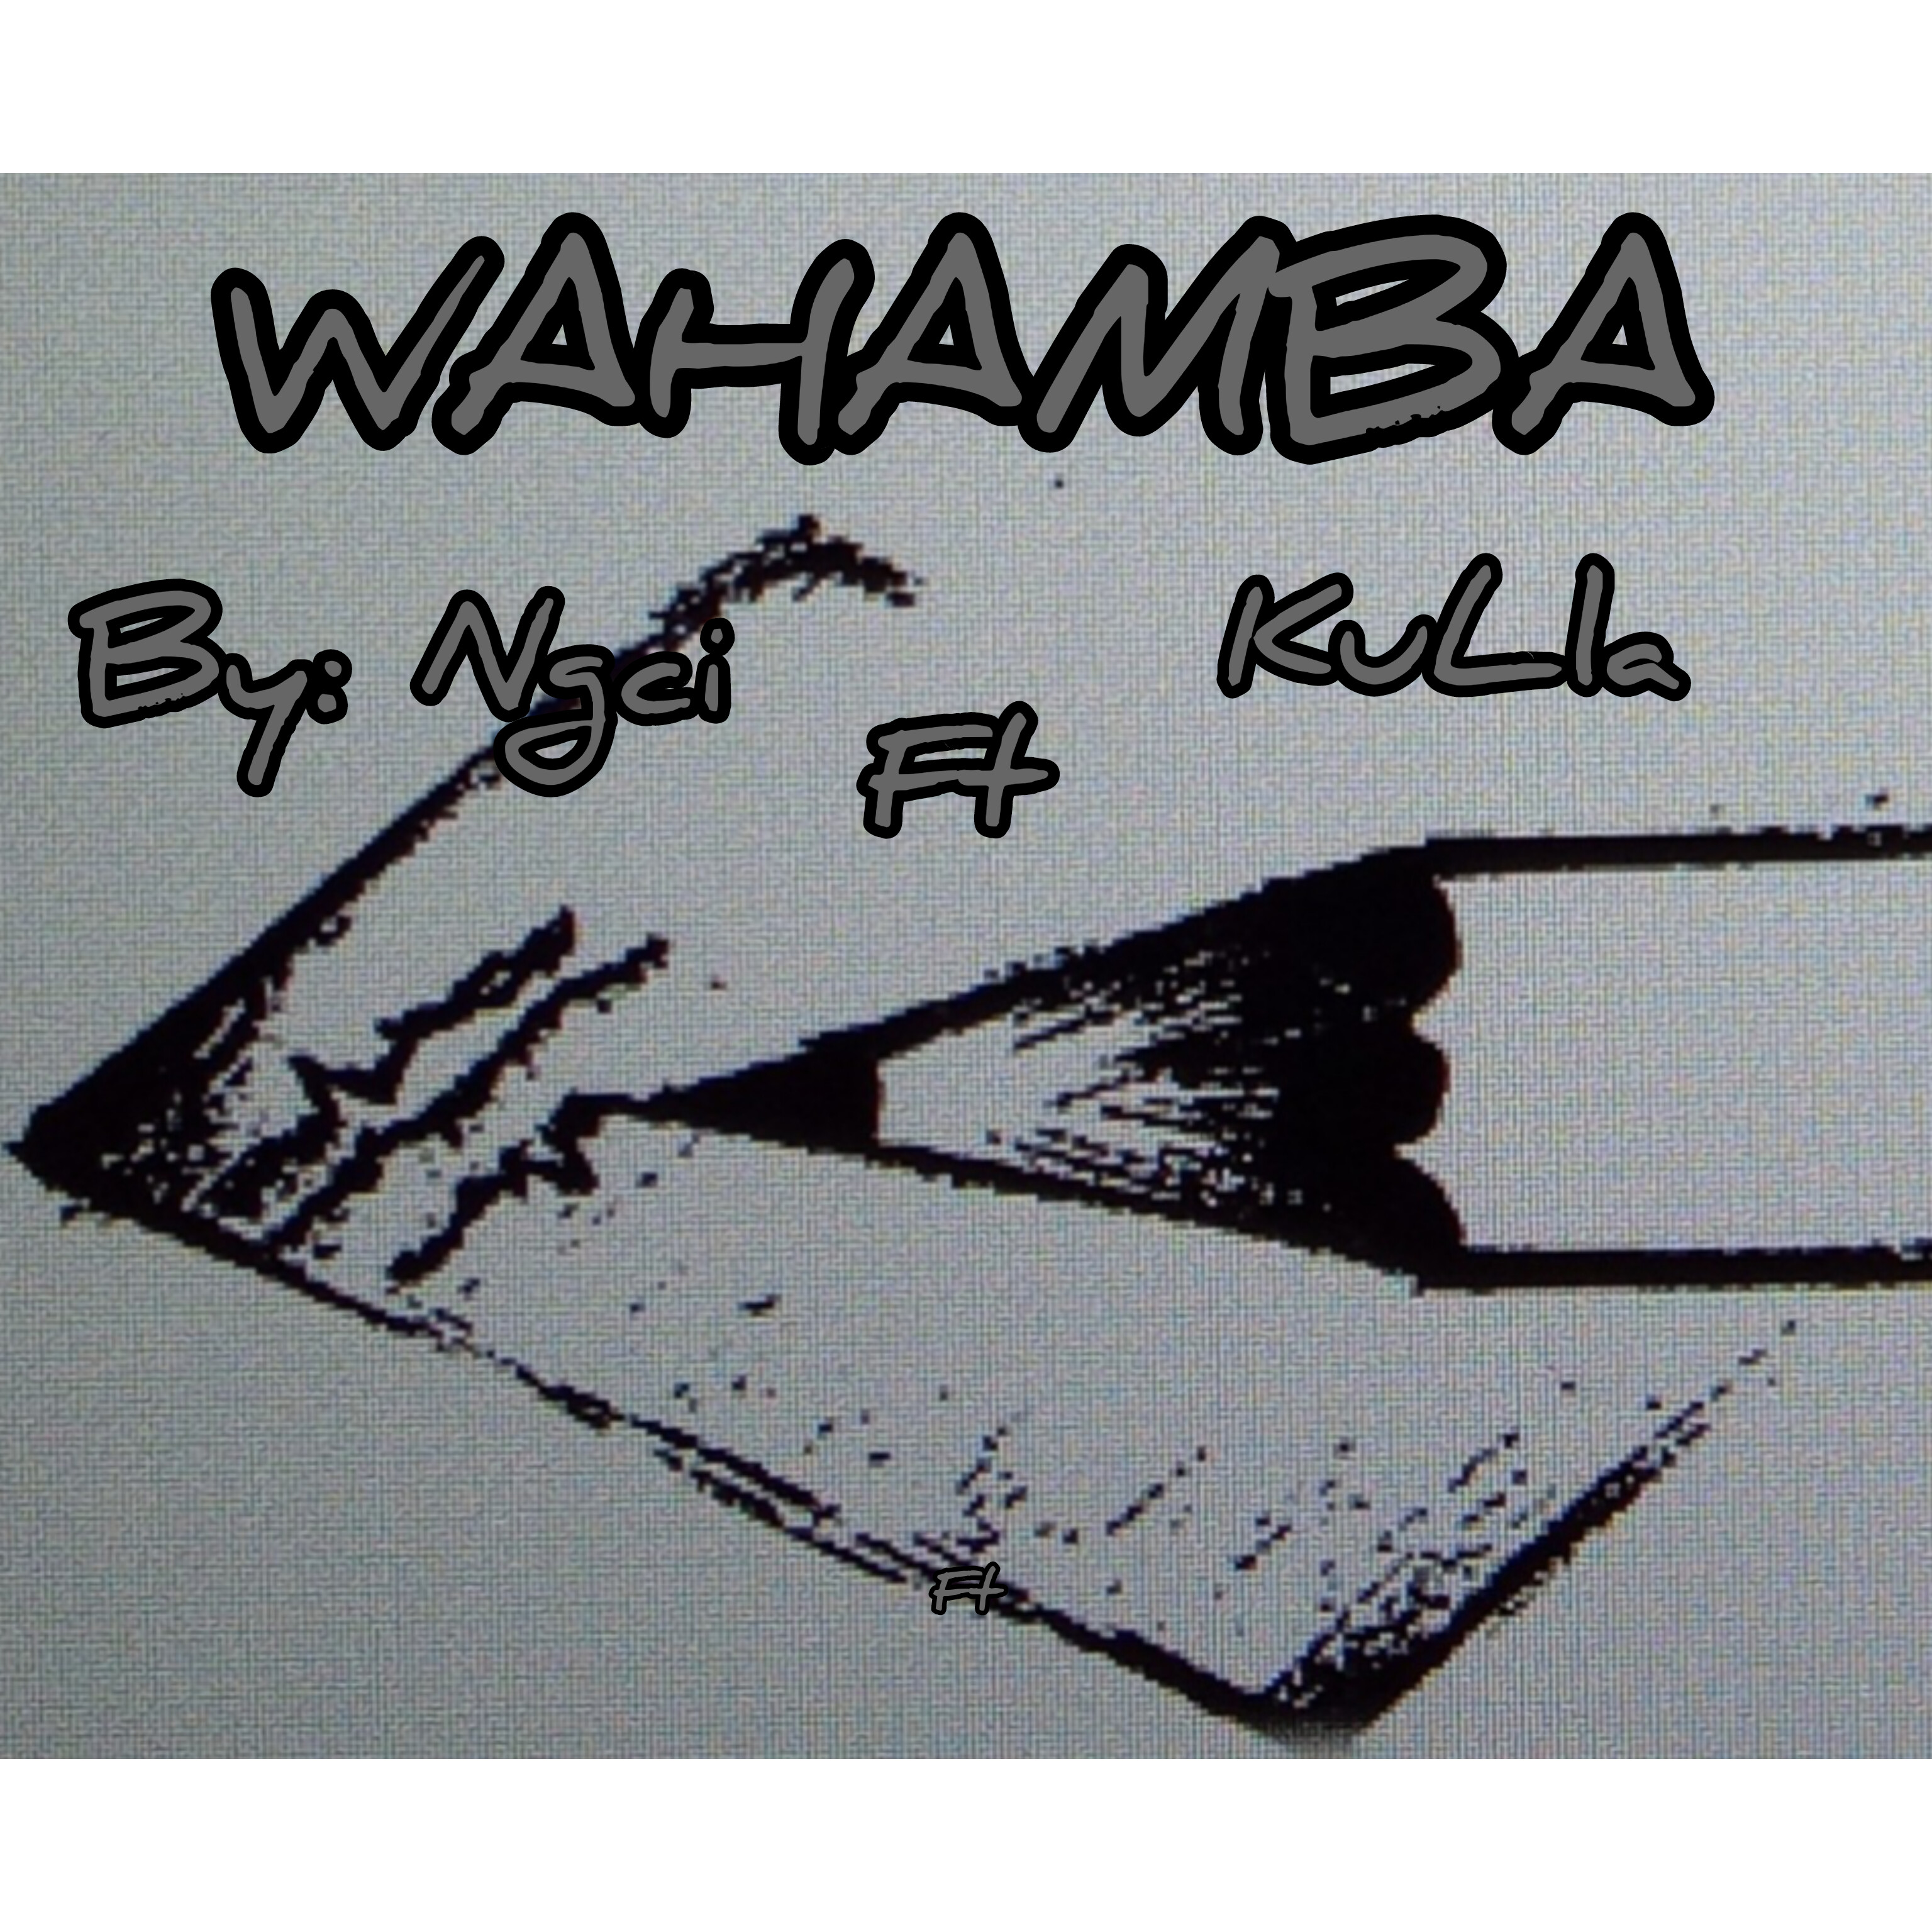 WAHAMBA - Ngci ft KuLla